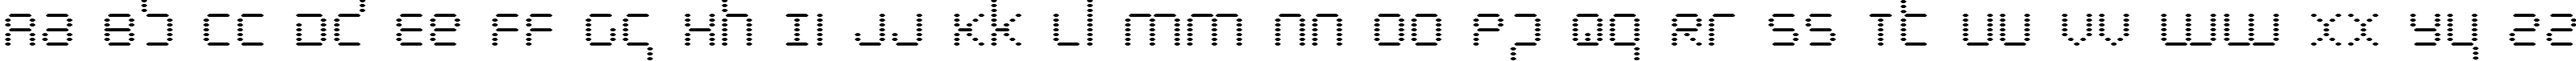 Пример написания английского алфавита шрифтом Byte Police